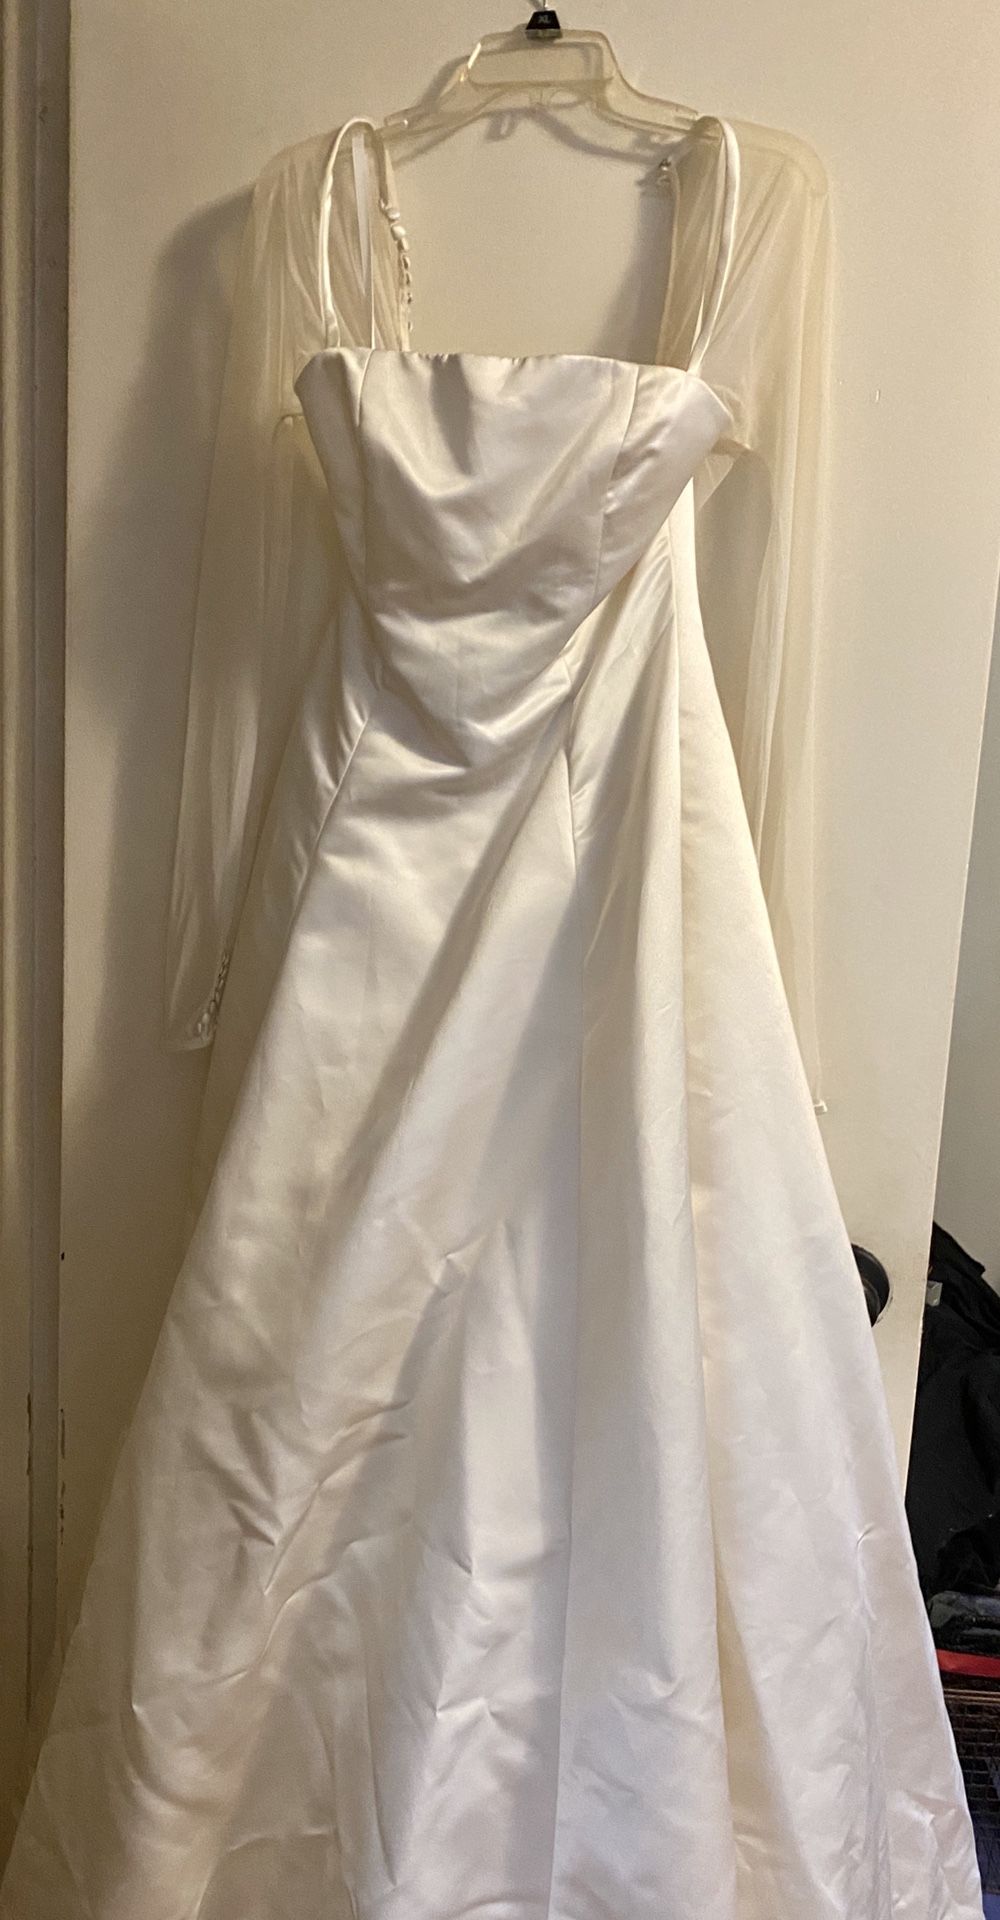 Long sleeve wedding gown